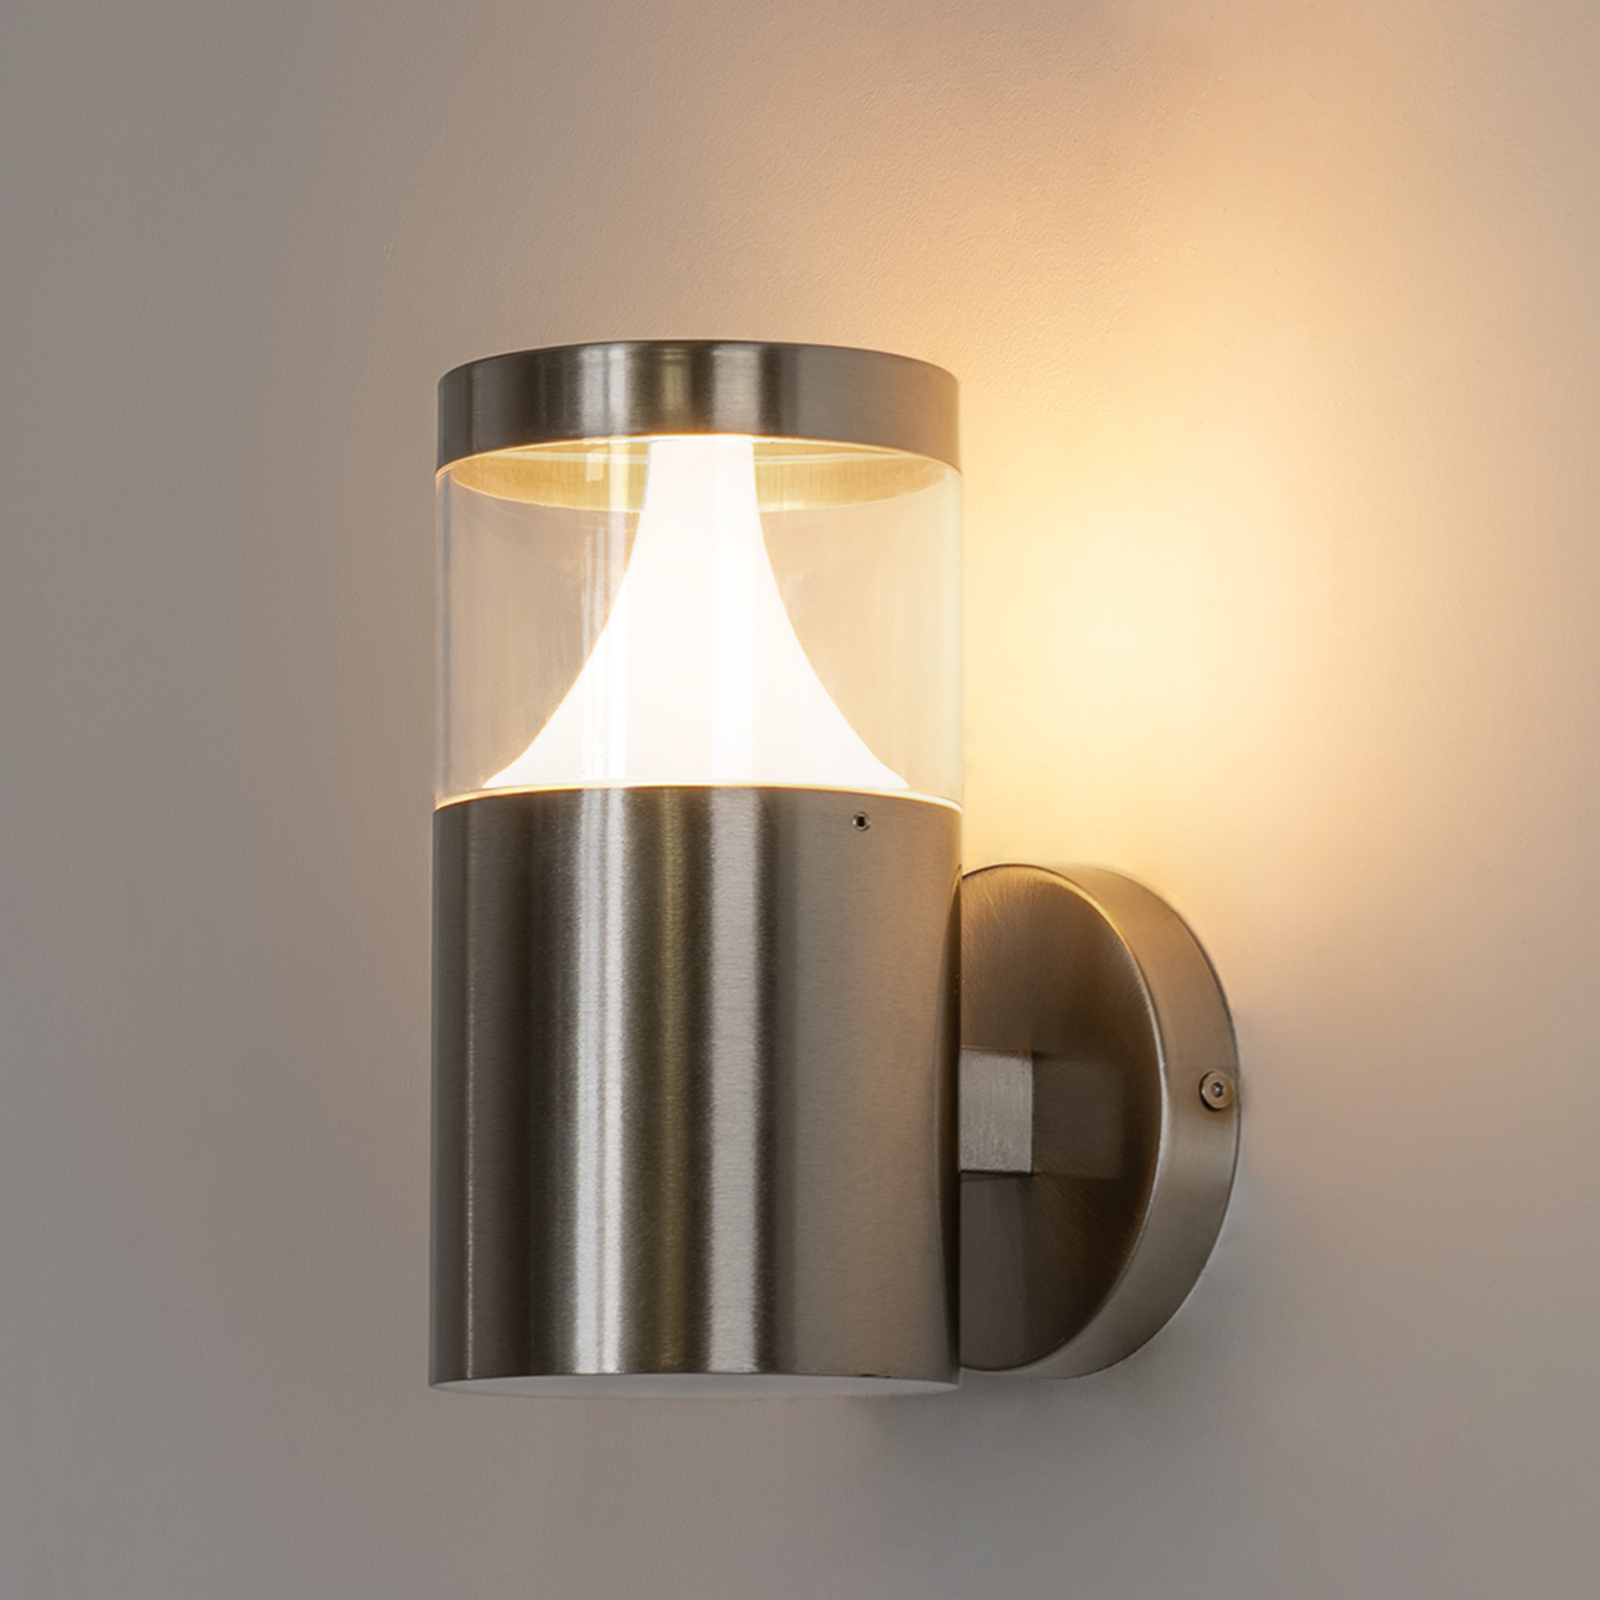 Arcchio Rudolfine kültéri fali lámpa, V4A rozsdamentes acélból